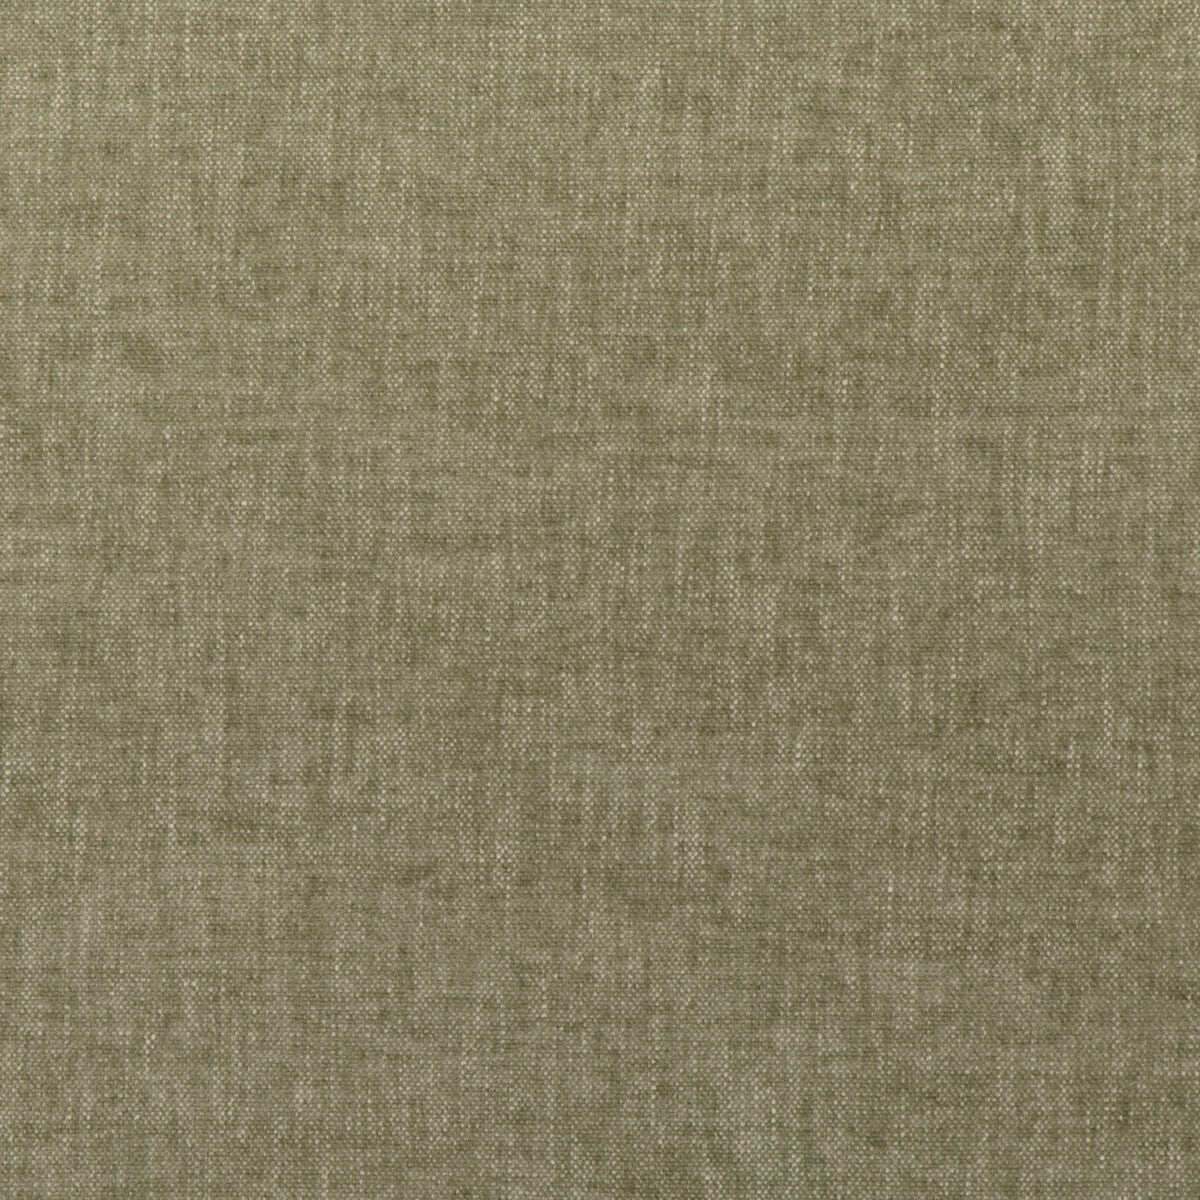 Kravet Smart fabric in 36663-23 color - pattern 36663.23.0 - by Kravet Smart in the Performance Kravetarmor collection